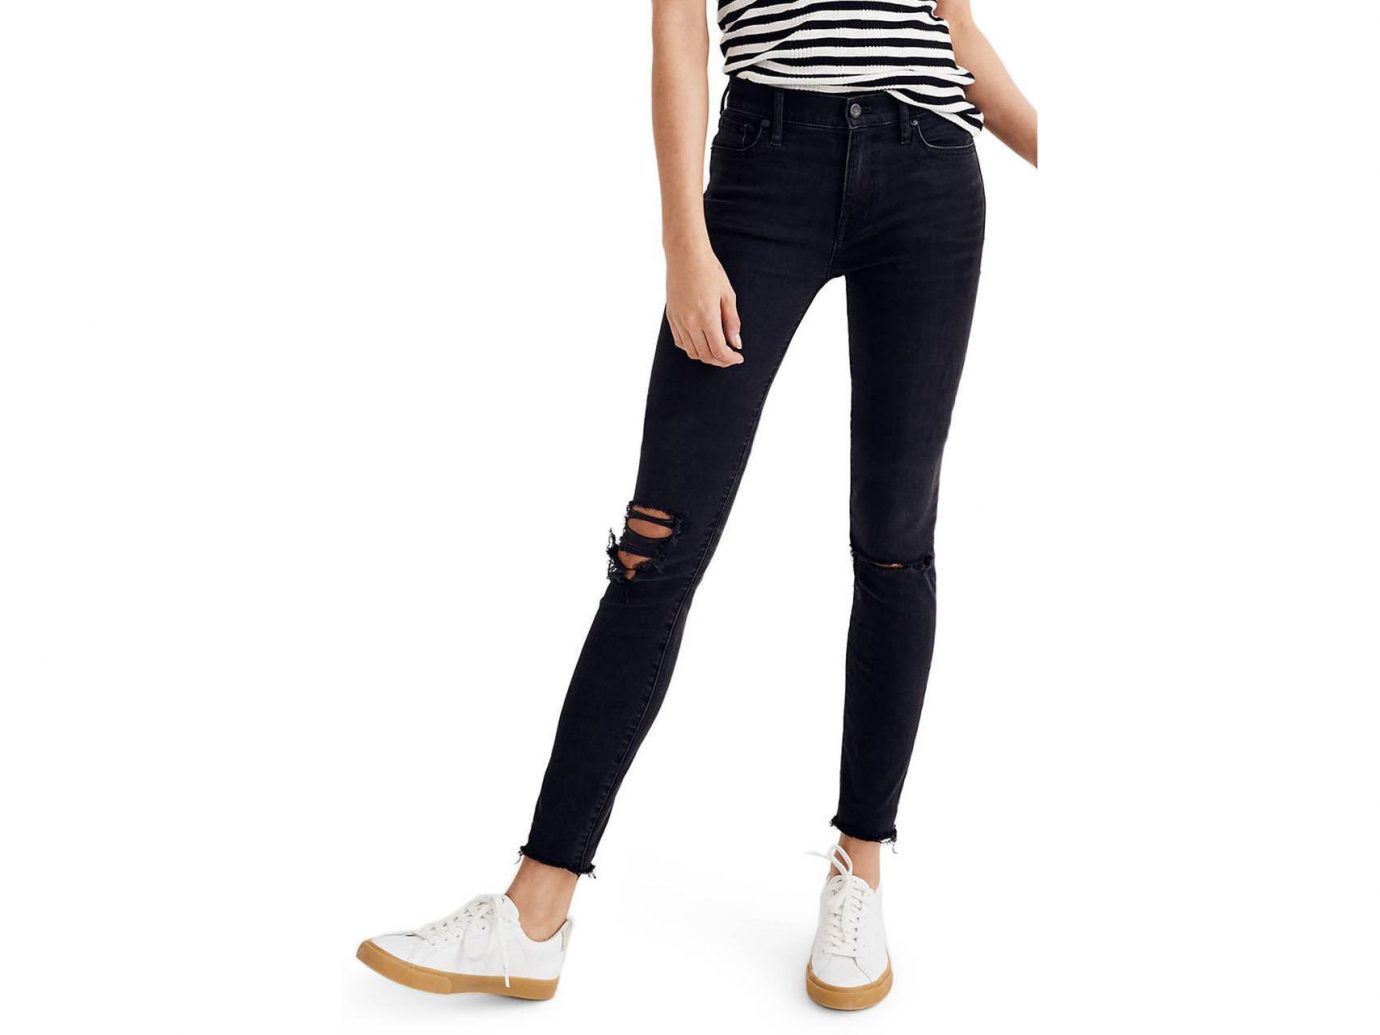 City NYC Style + Design Travel Shop clothing person jeans trouser denim waist standing joint posing leggings trousers leg human leg shoe tights abdomen pocket